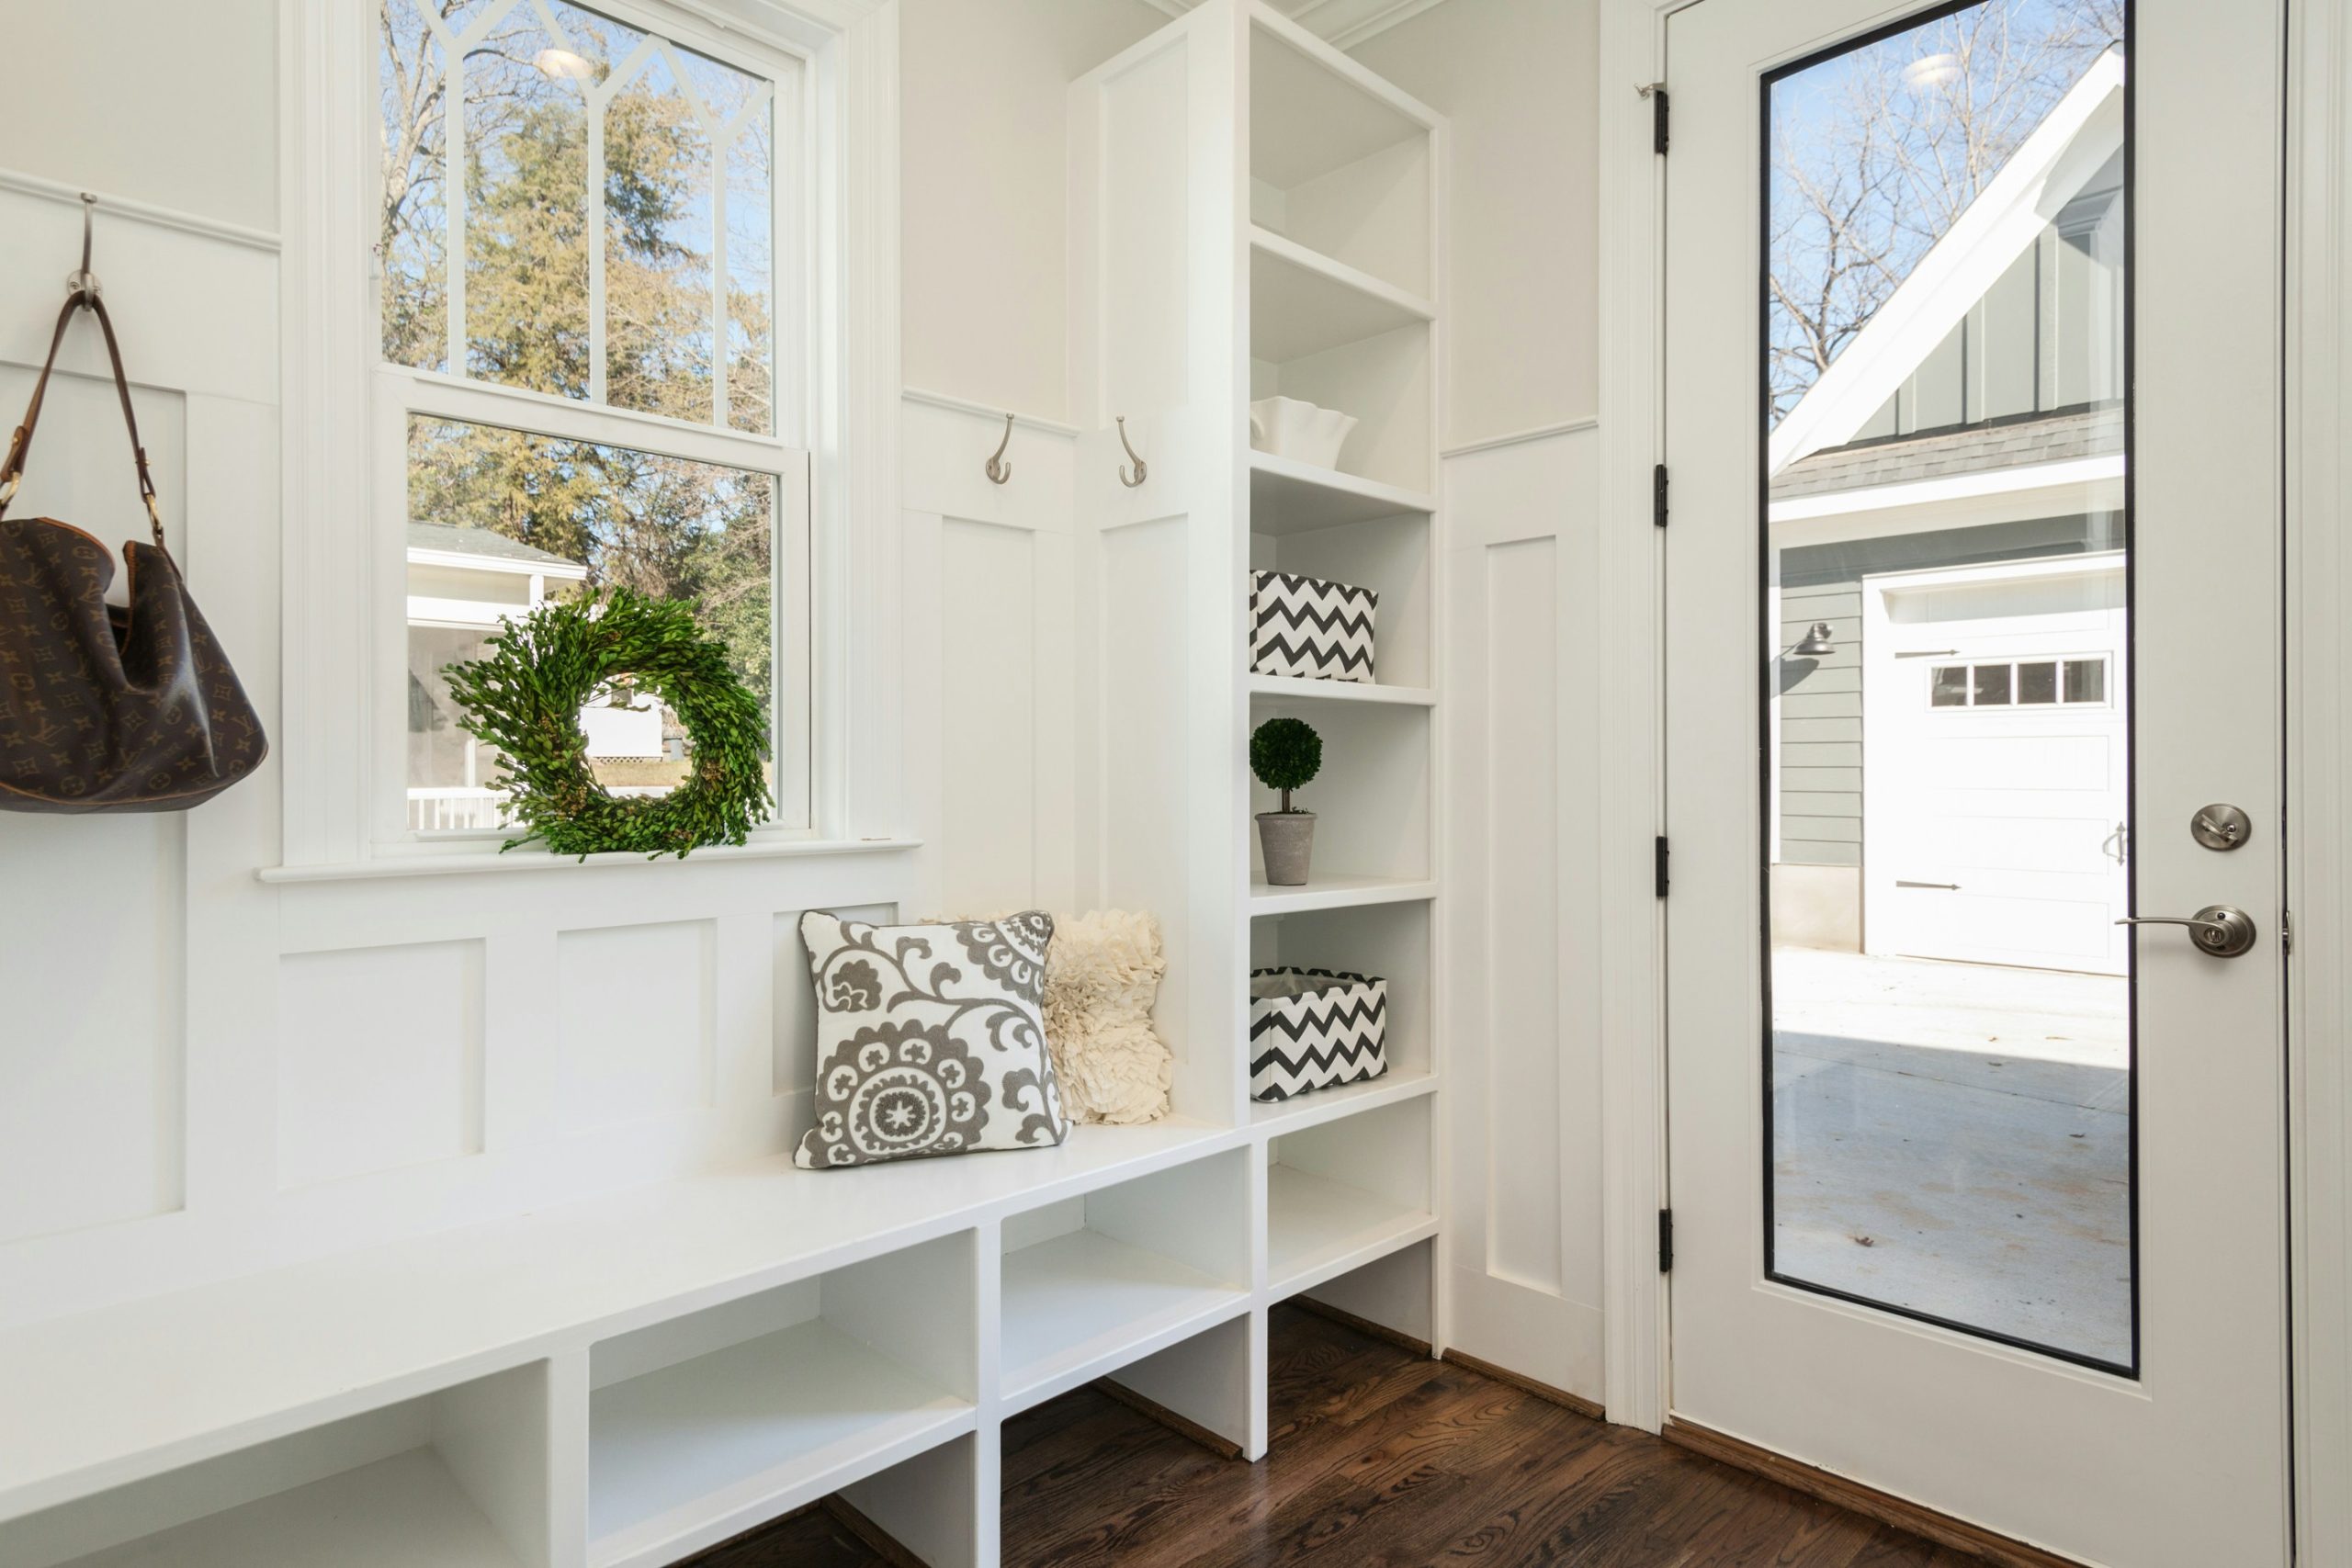 Internal Doors as Design Elements: Enhancing Interior Spaces